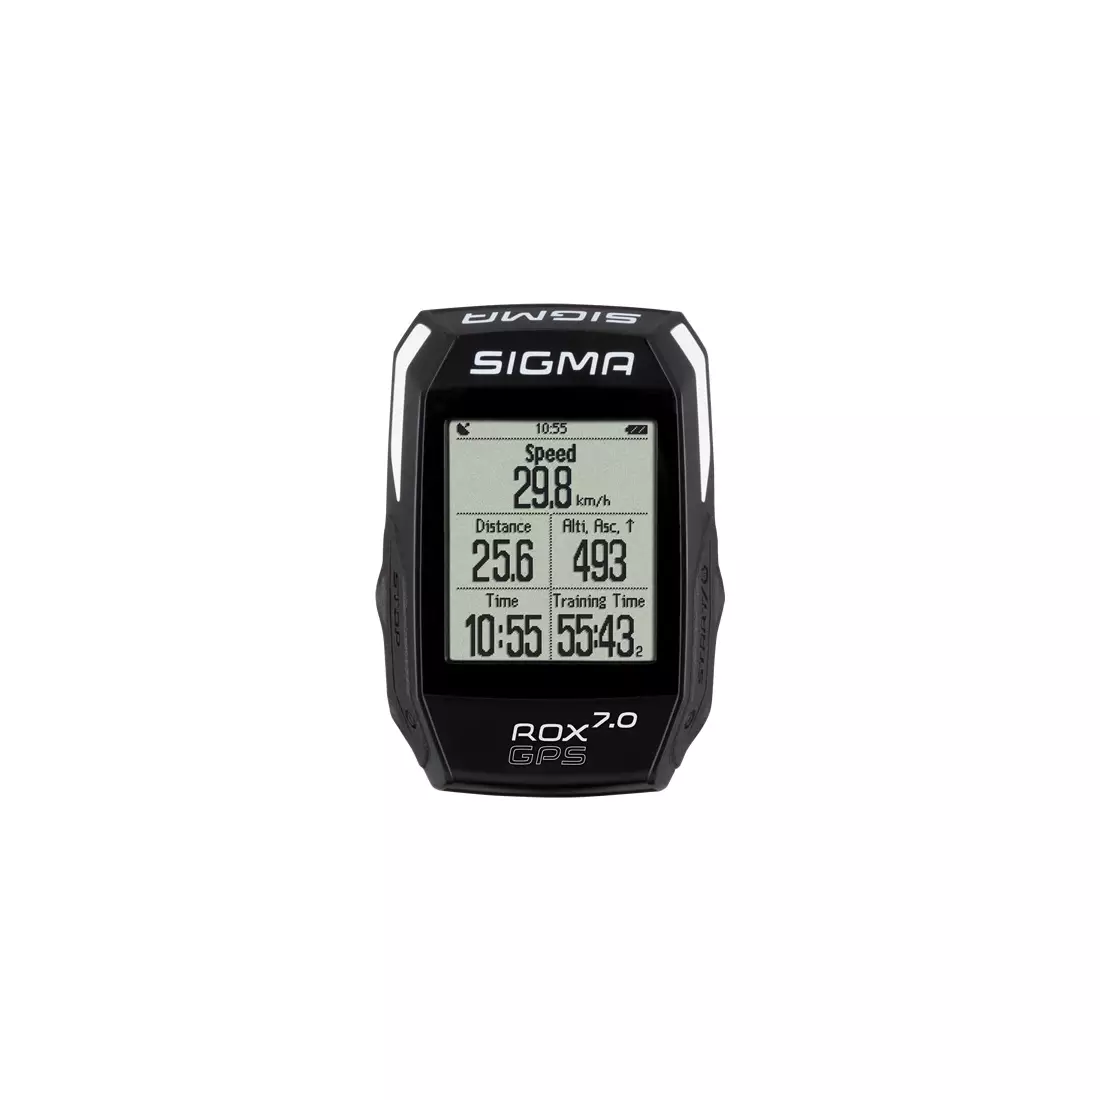 SIGMA ROX 7.0 GPS counter black